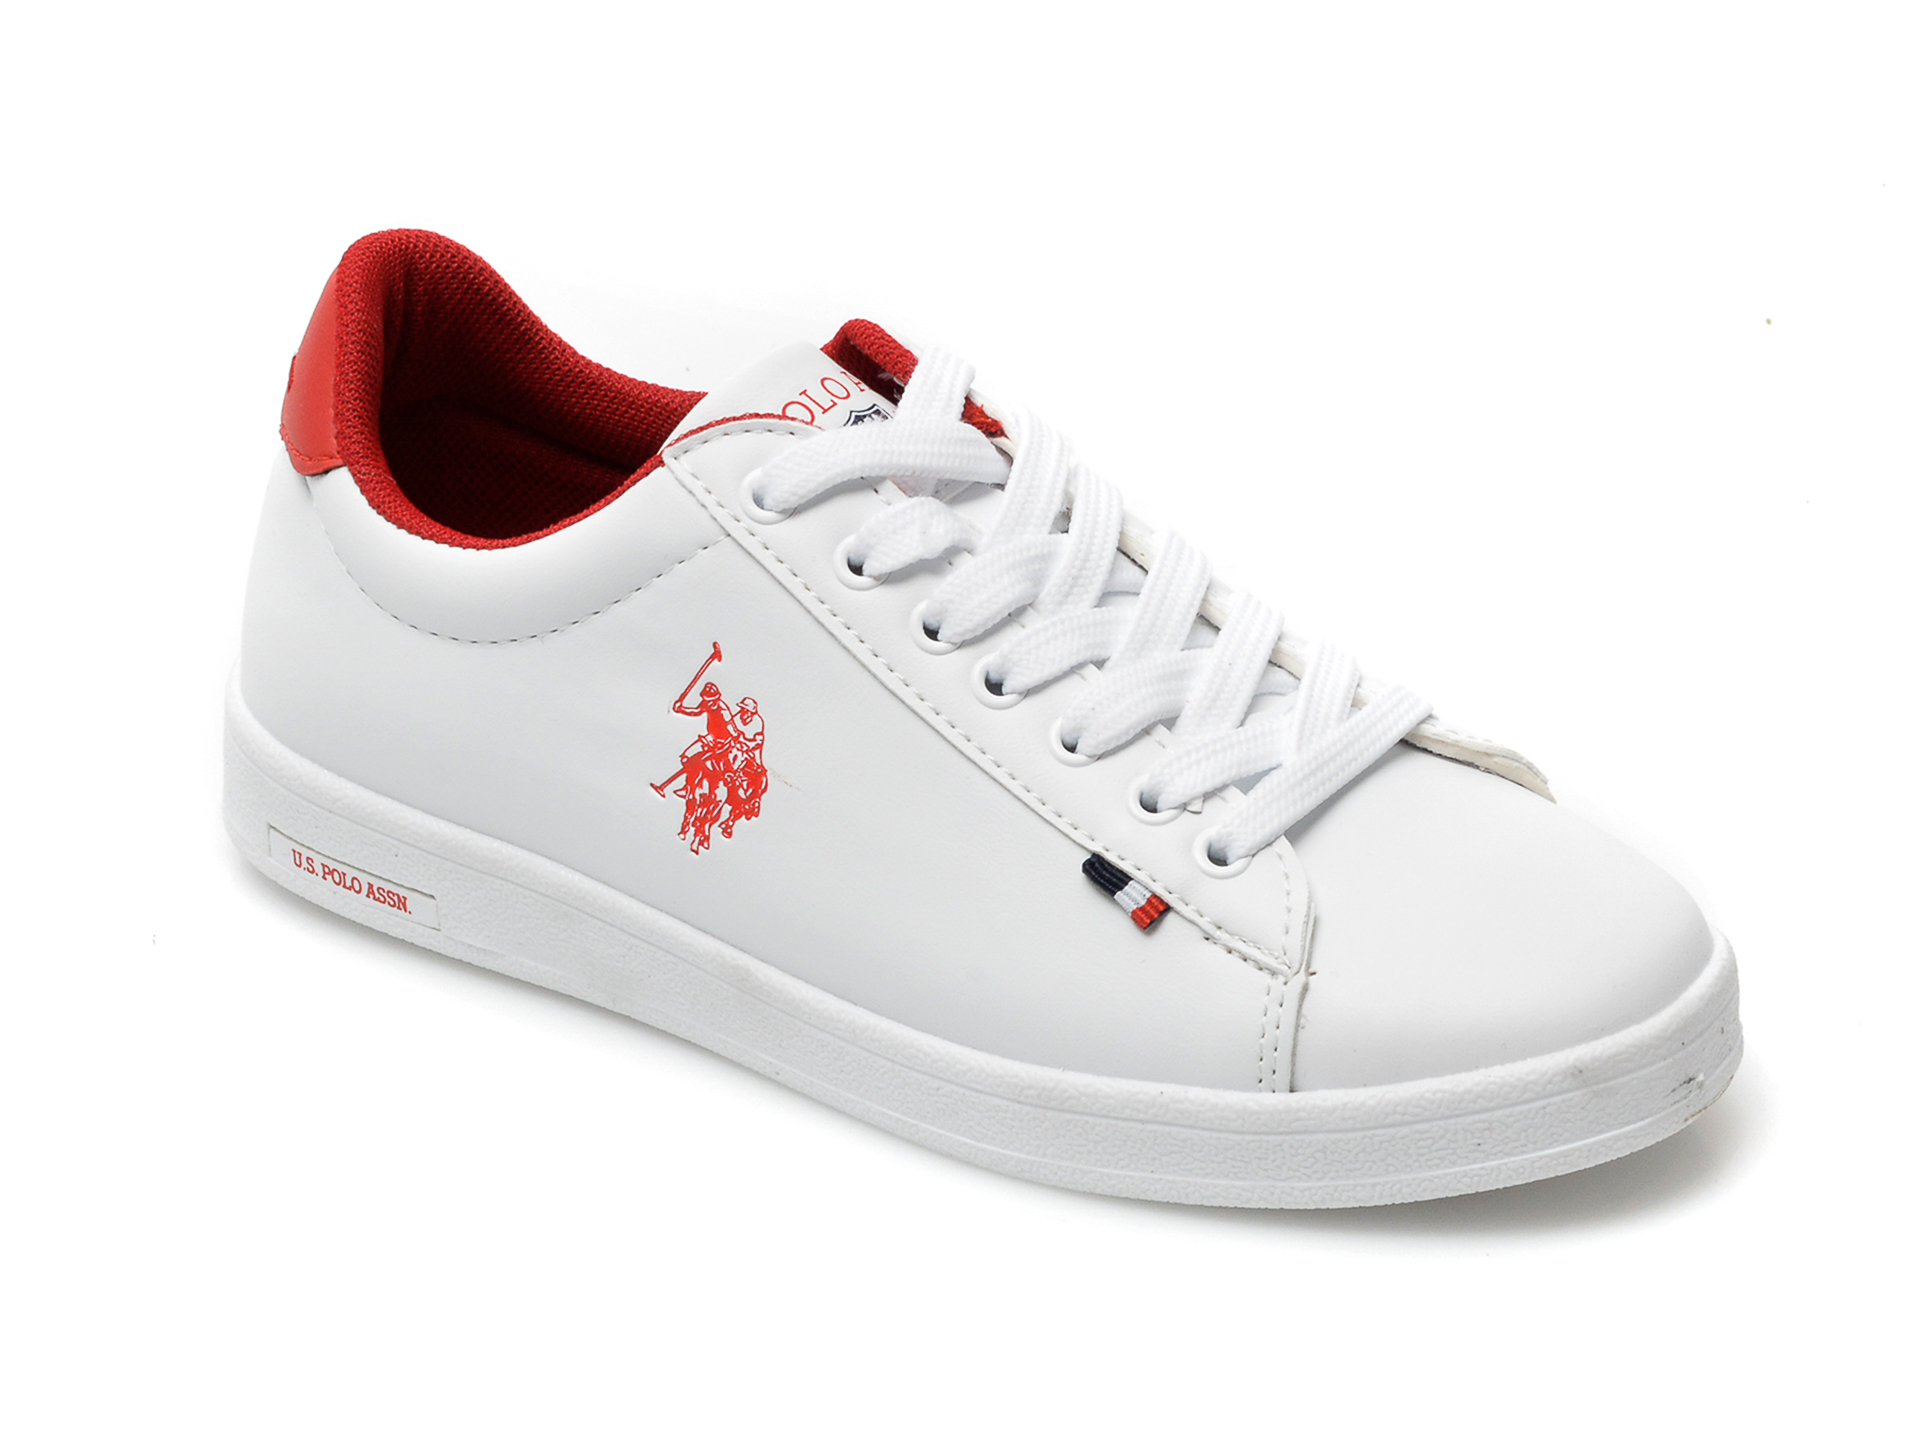 Pantofi sport US POLO ASSN albi, FRAGS2F, din piele ecologica /copii/incaltaminte